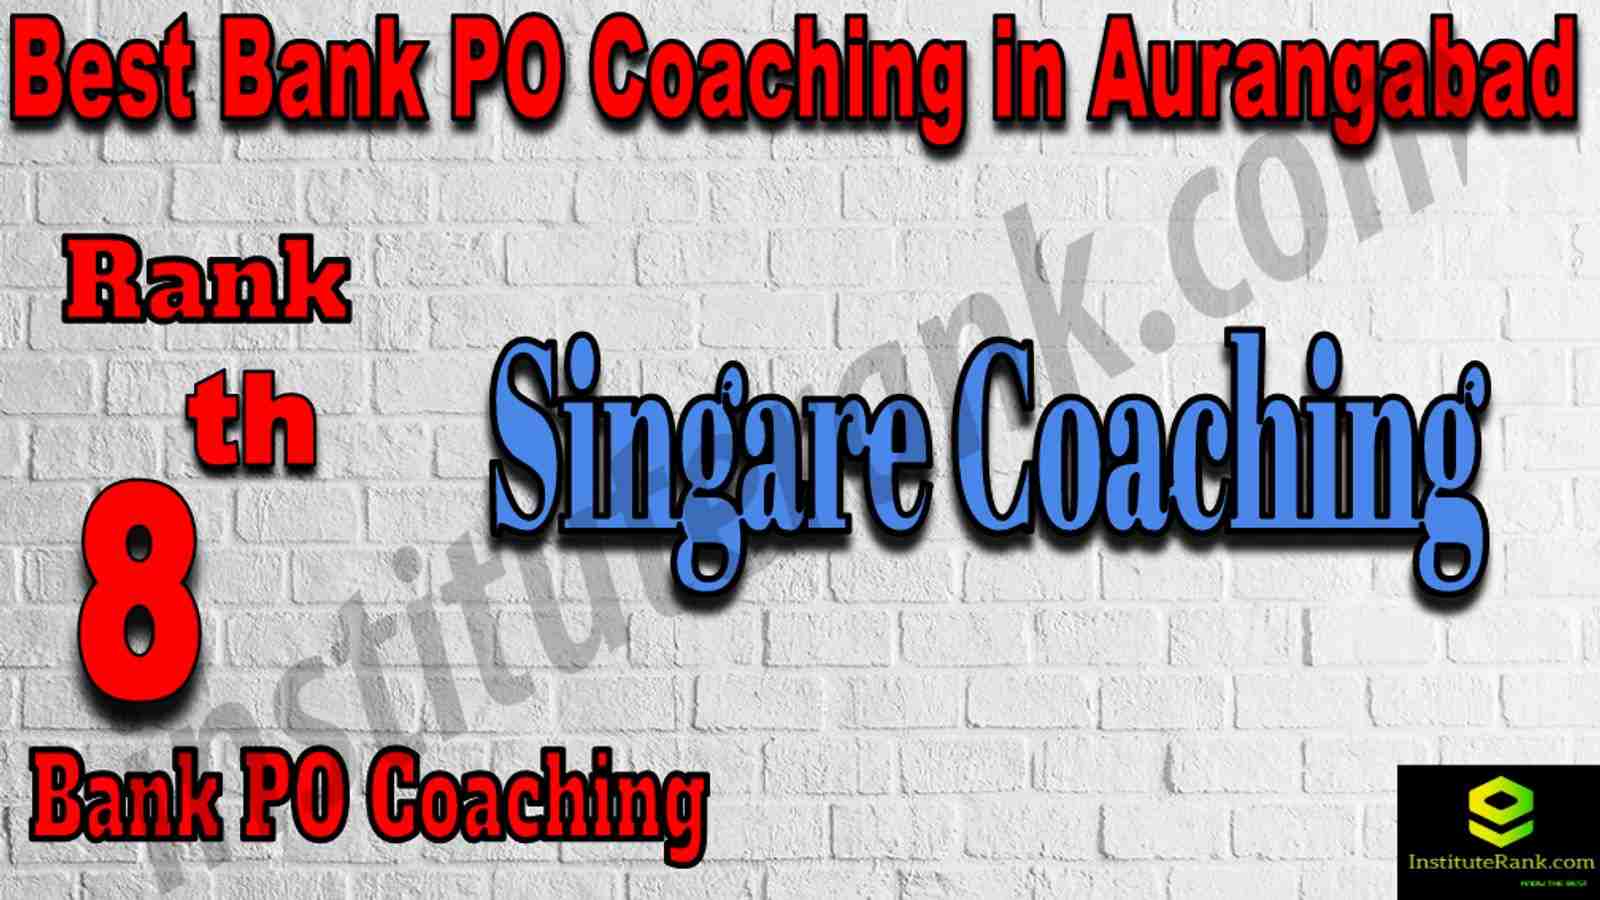 8th Best Bank PO Coaching in Aurangabad